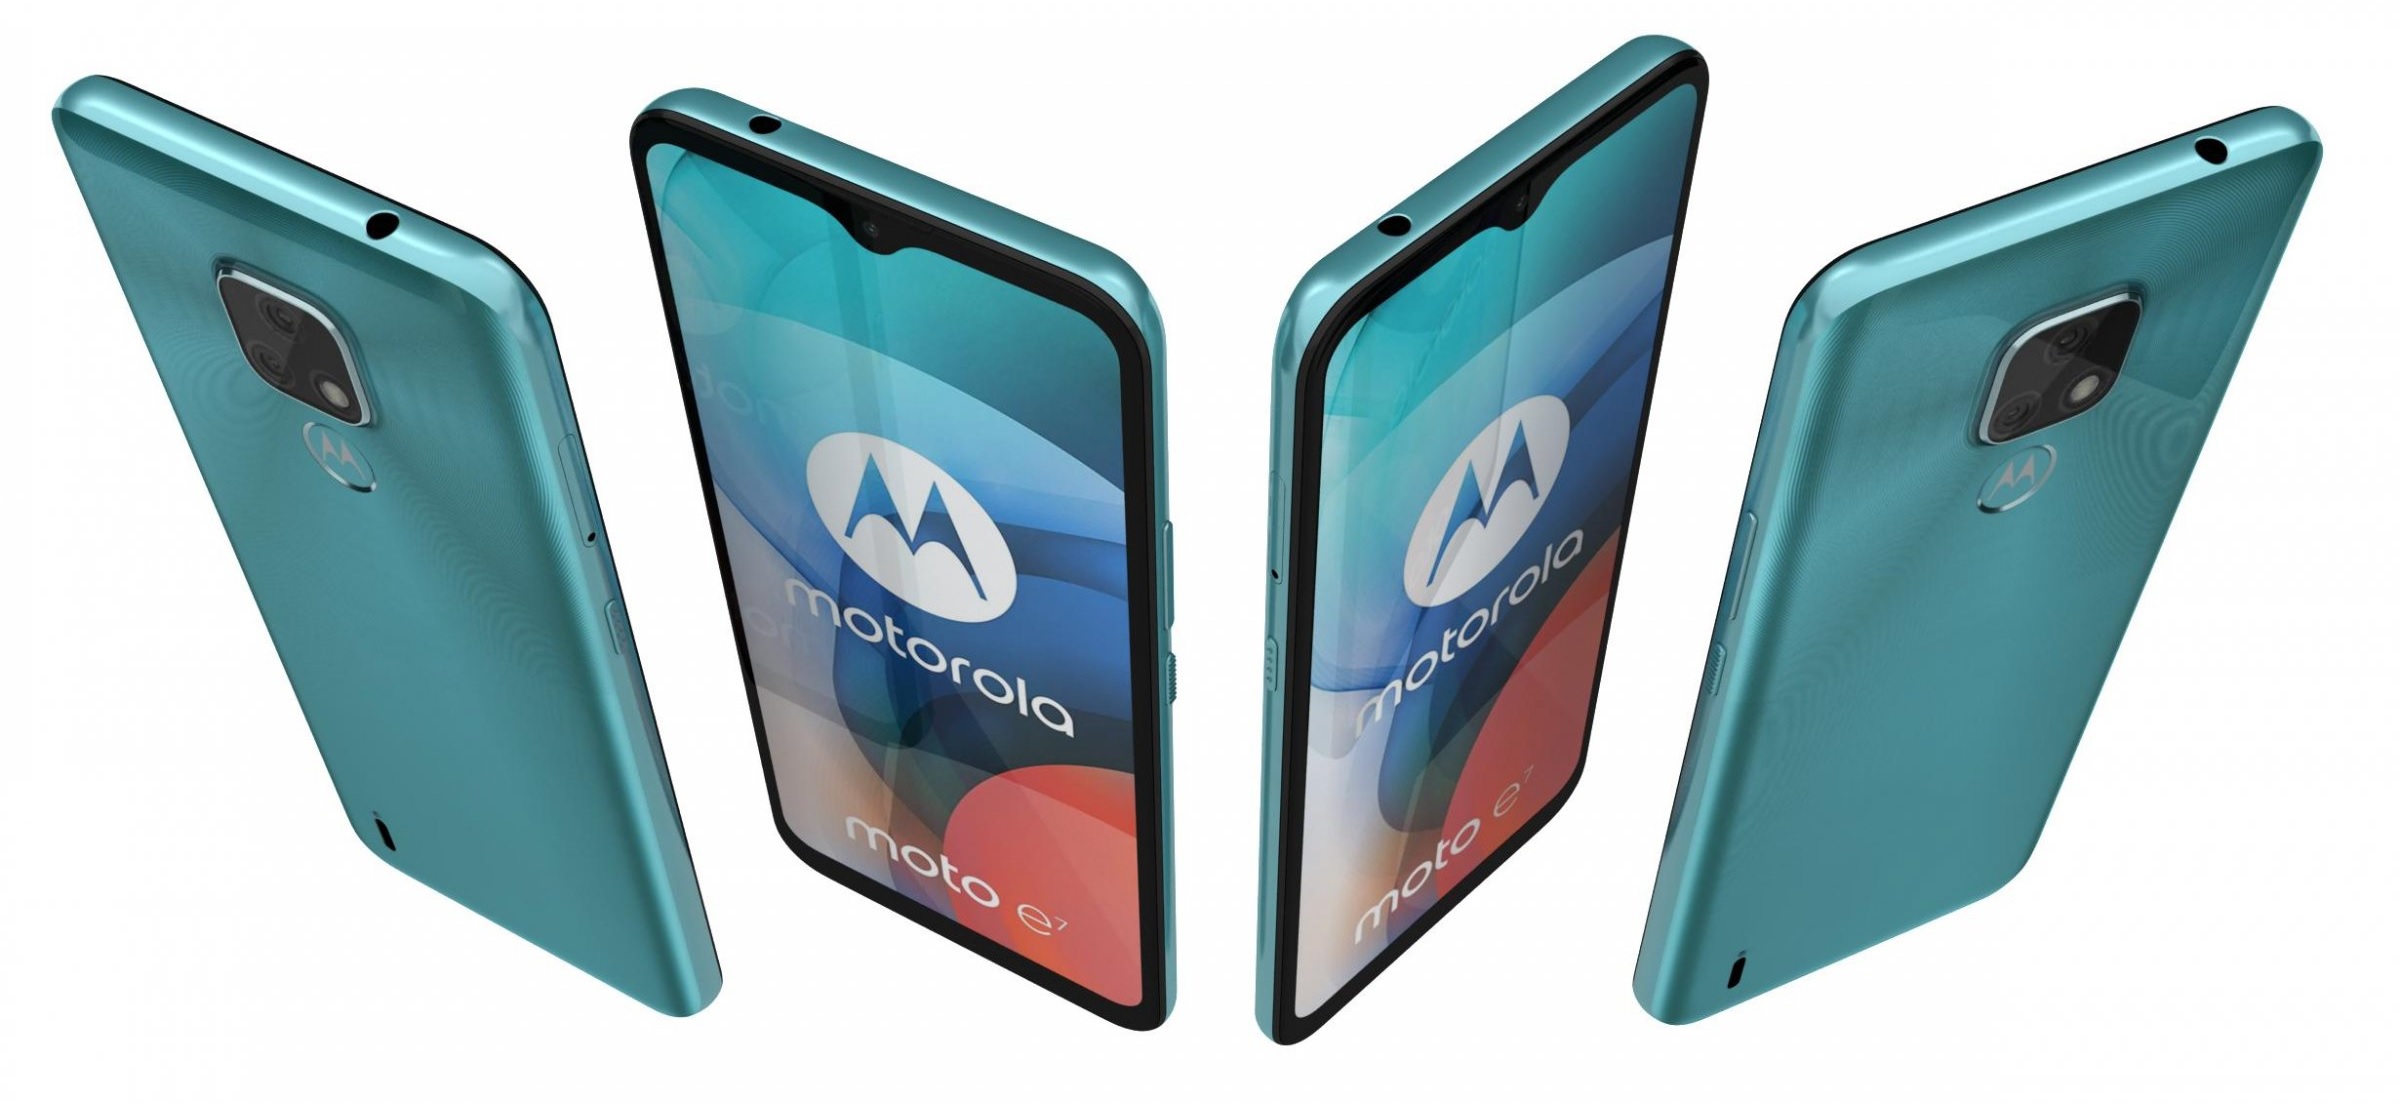 Motorola Moto E7 2GB / 32GB Ice Flow